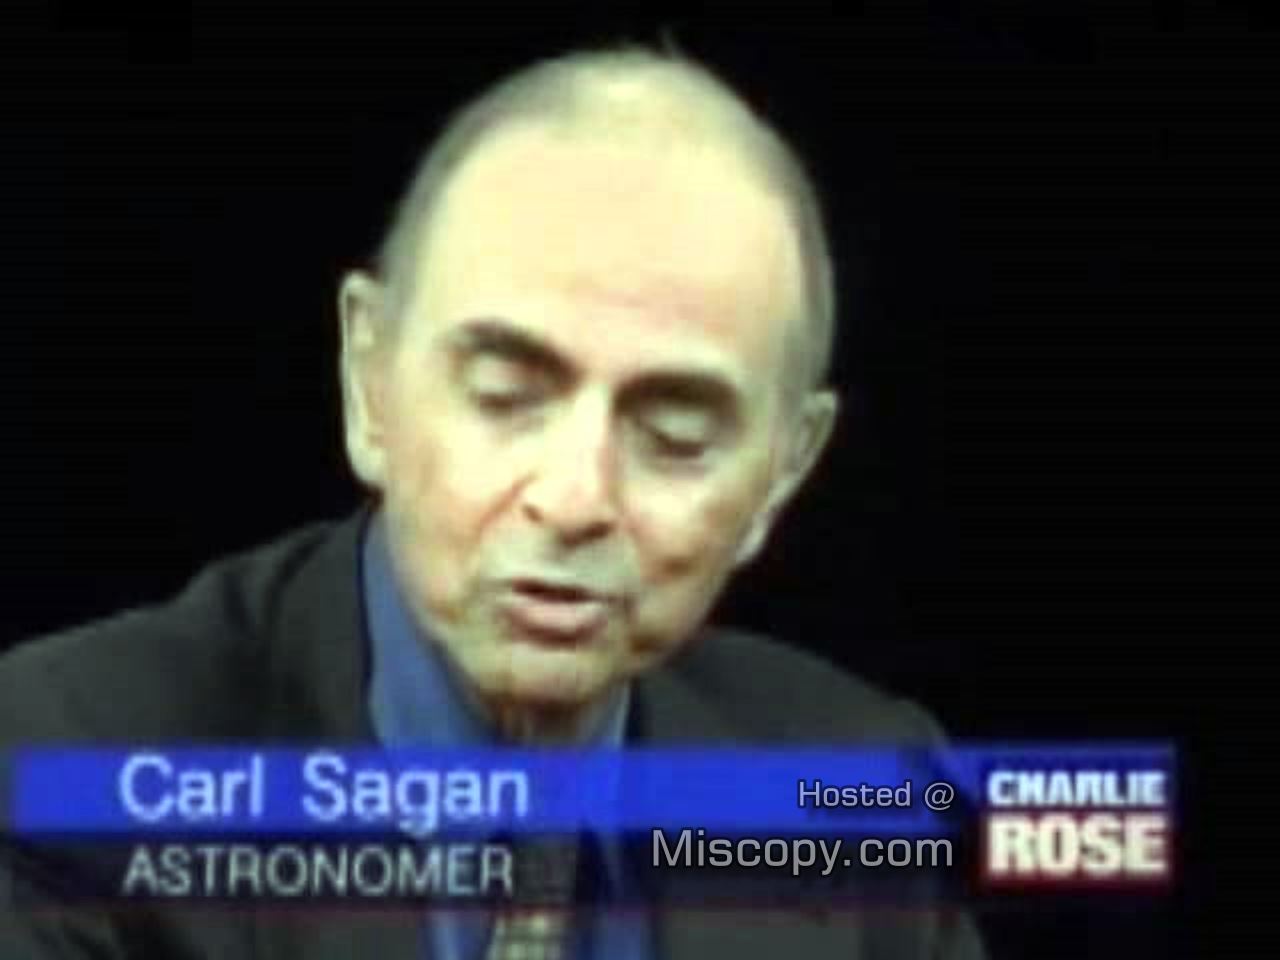 Science, Pseudoscience, and Skepticism with Carl Sagan